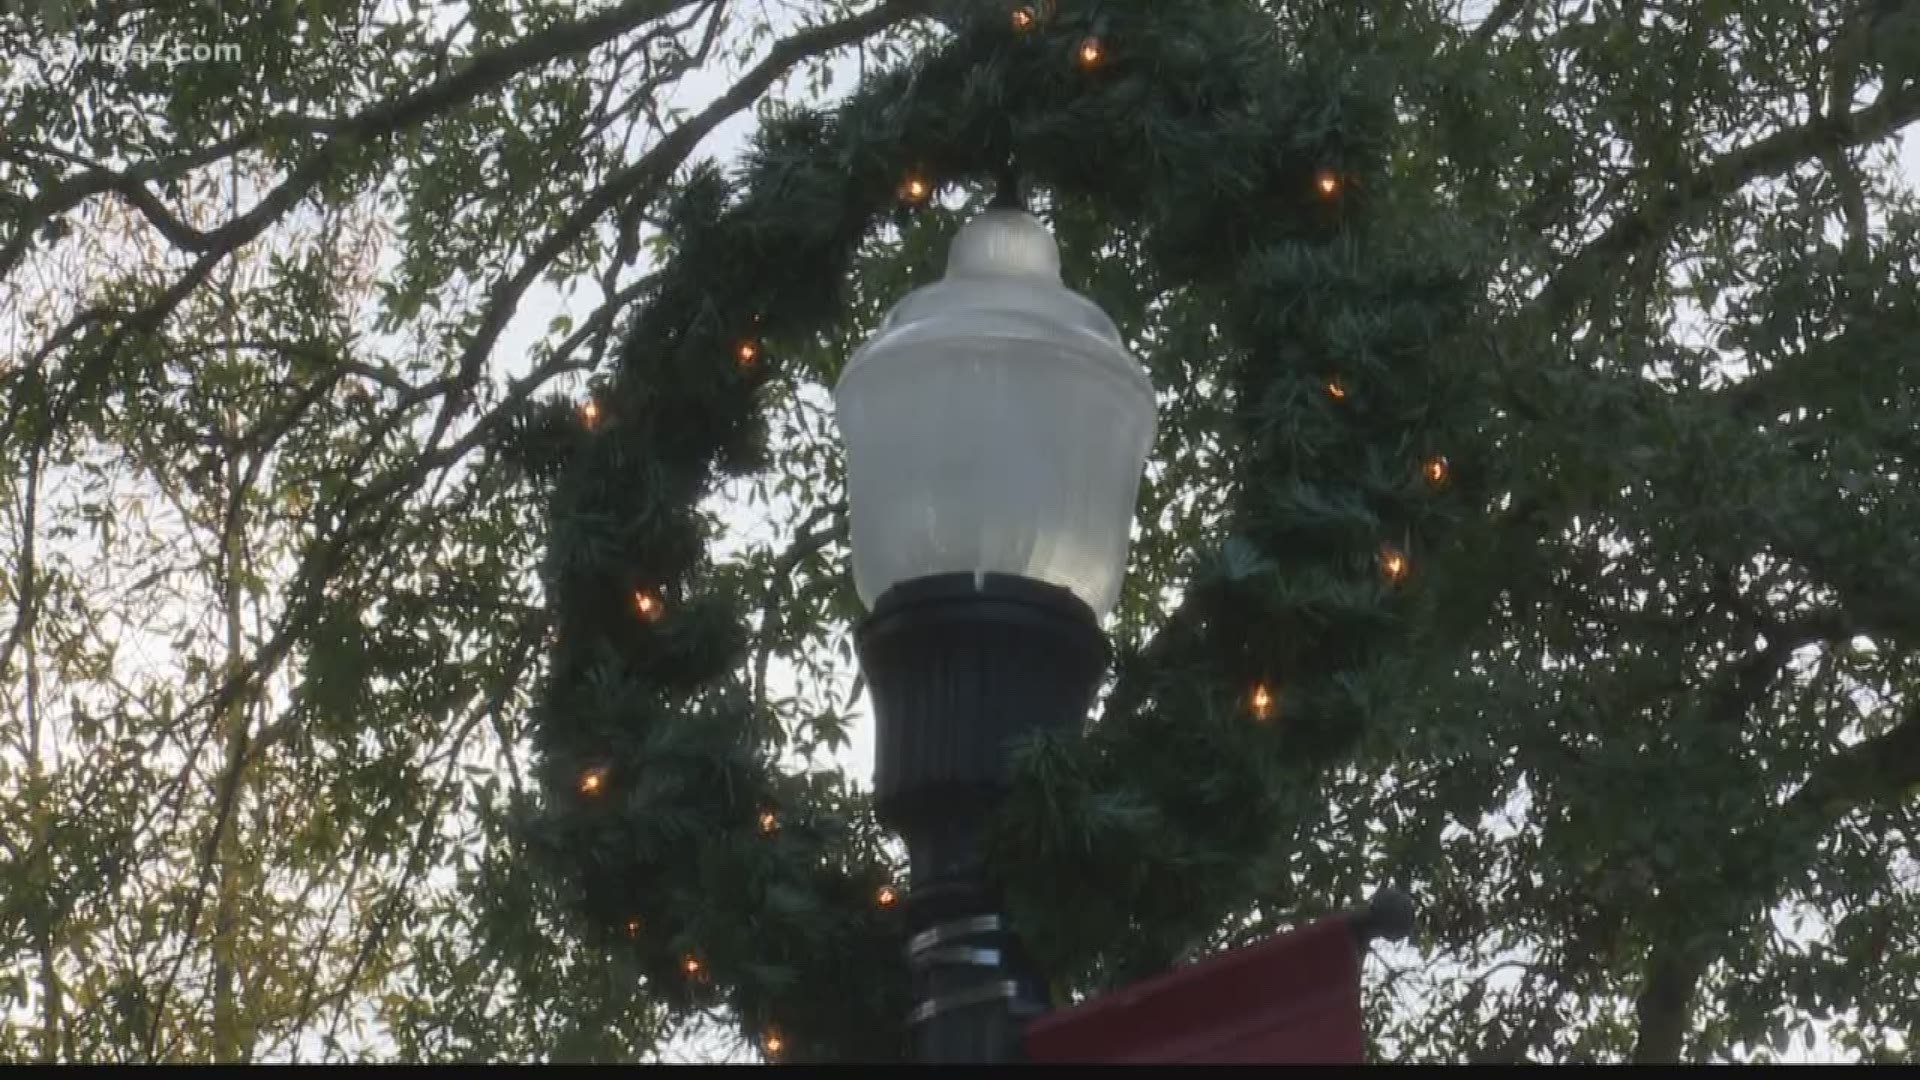 Wrightsville restarting Christmas tradition